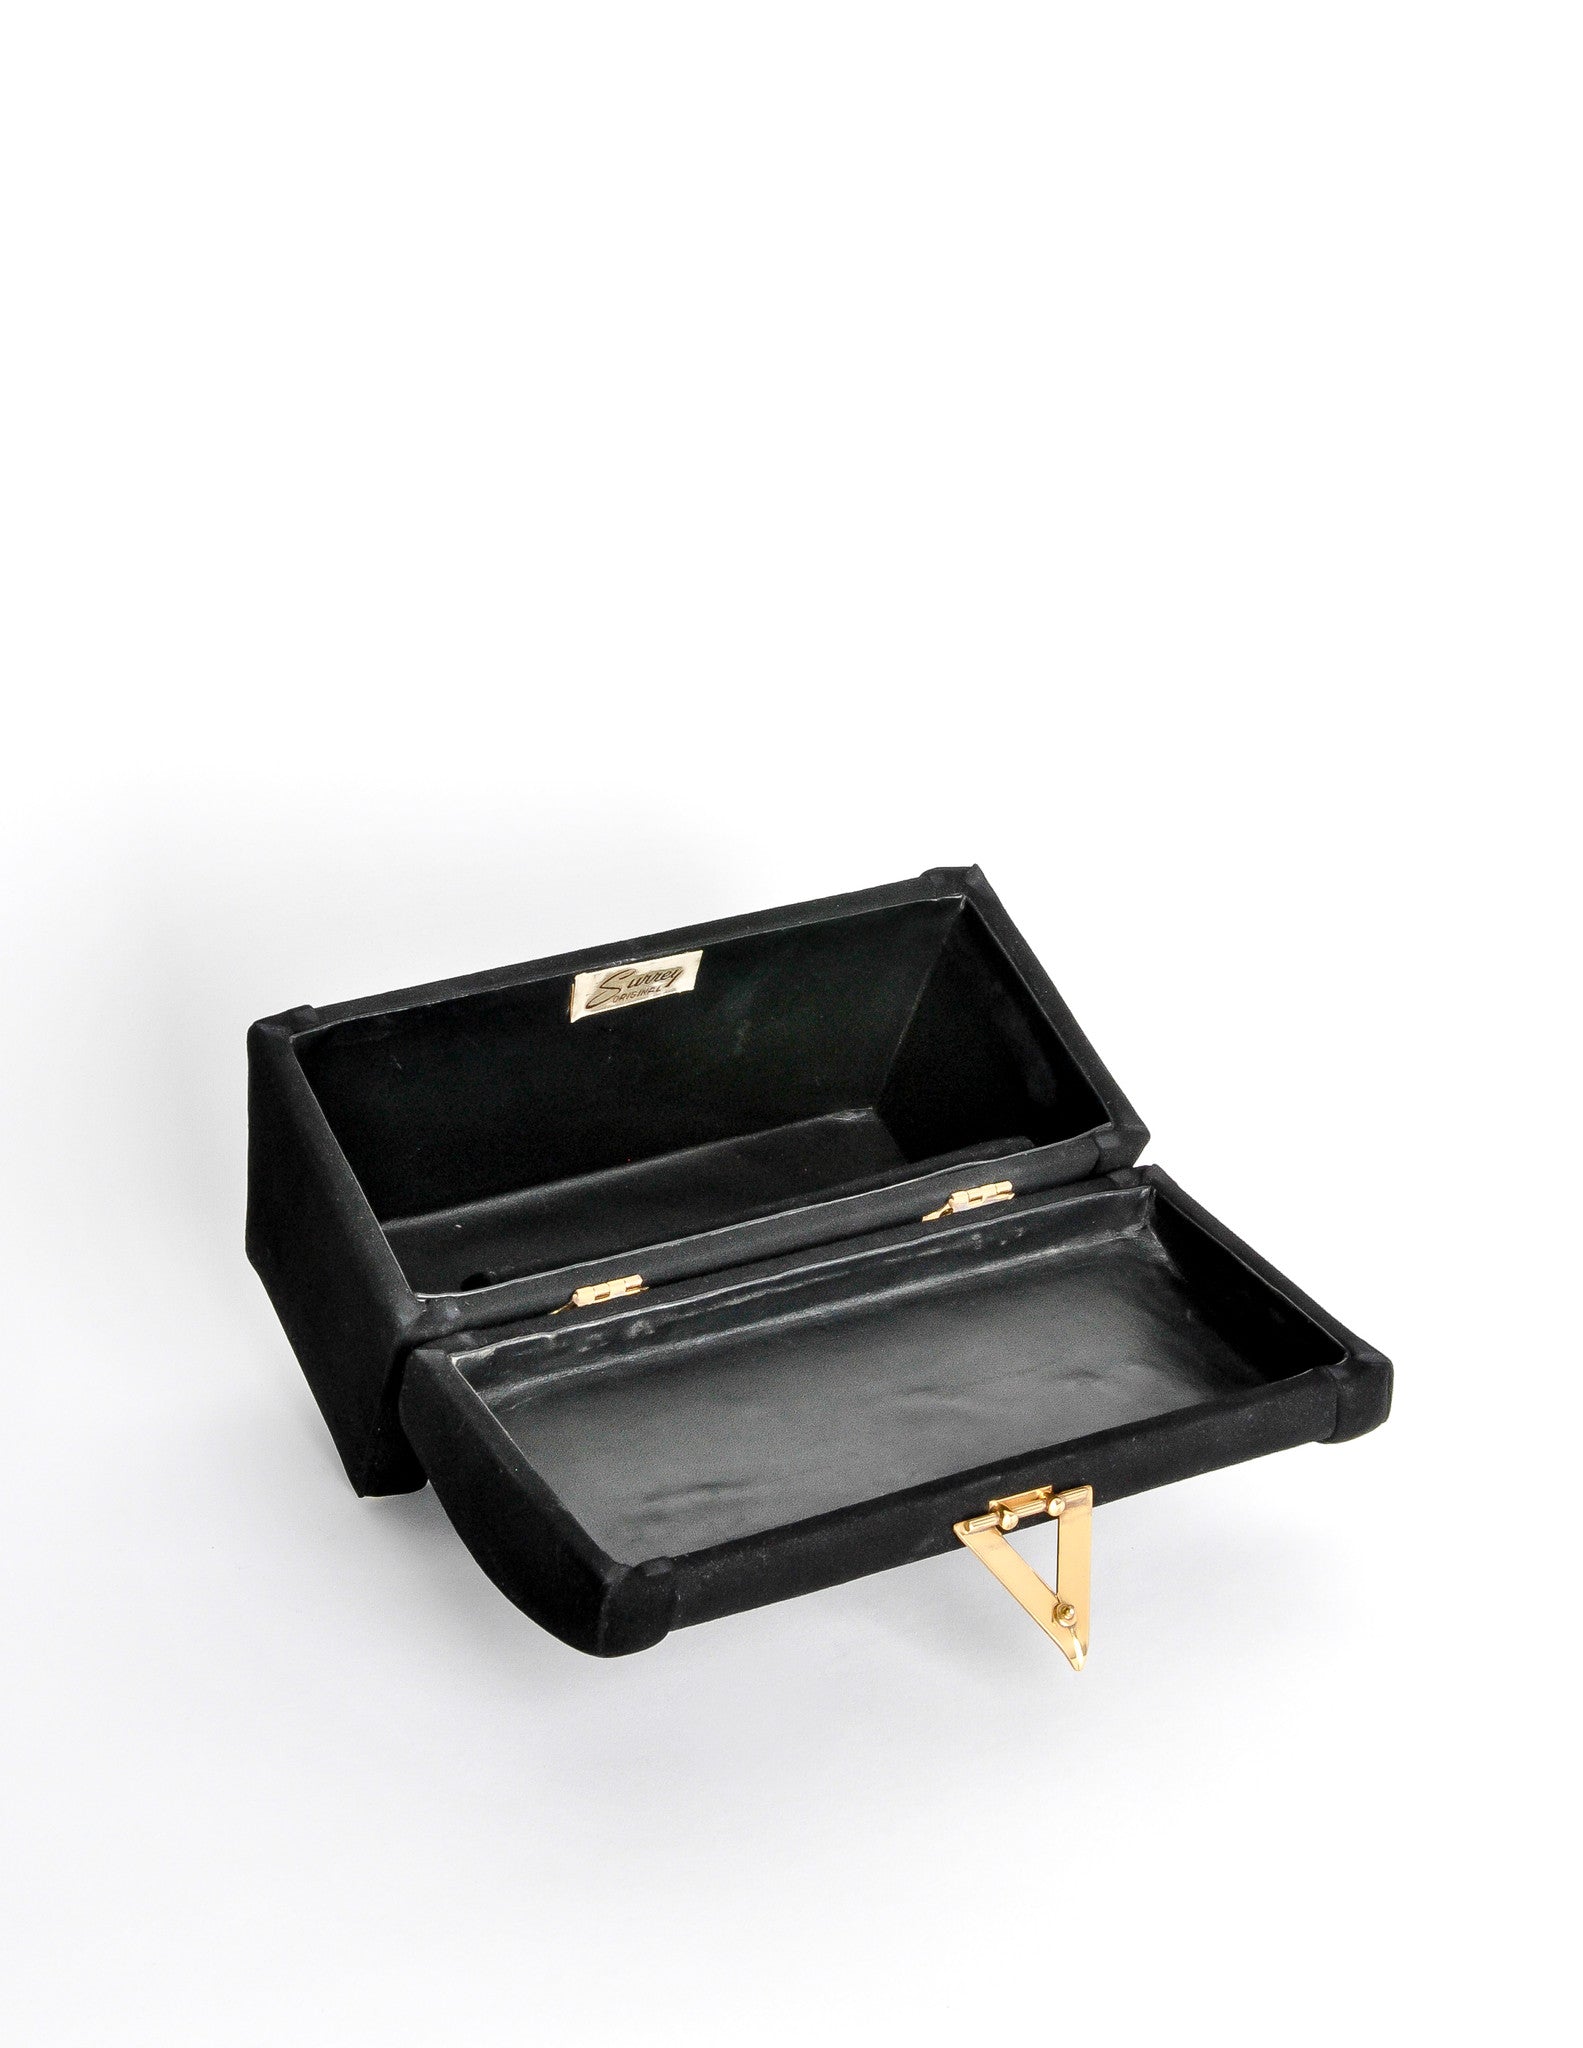 Surrey Vintage 1960s Black Box Handbag - from Amarcord Vintage Fashion